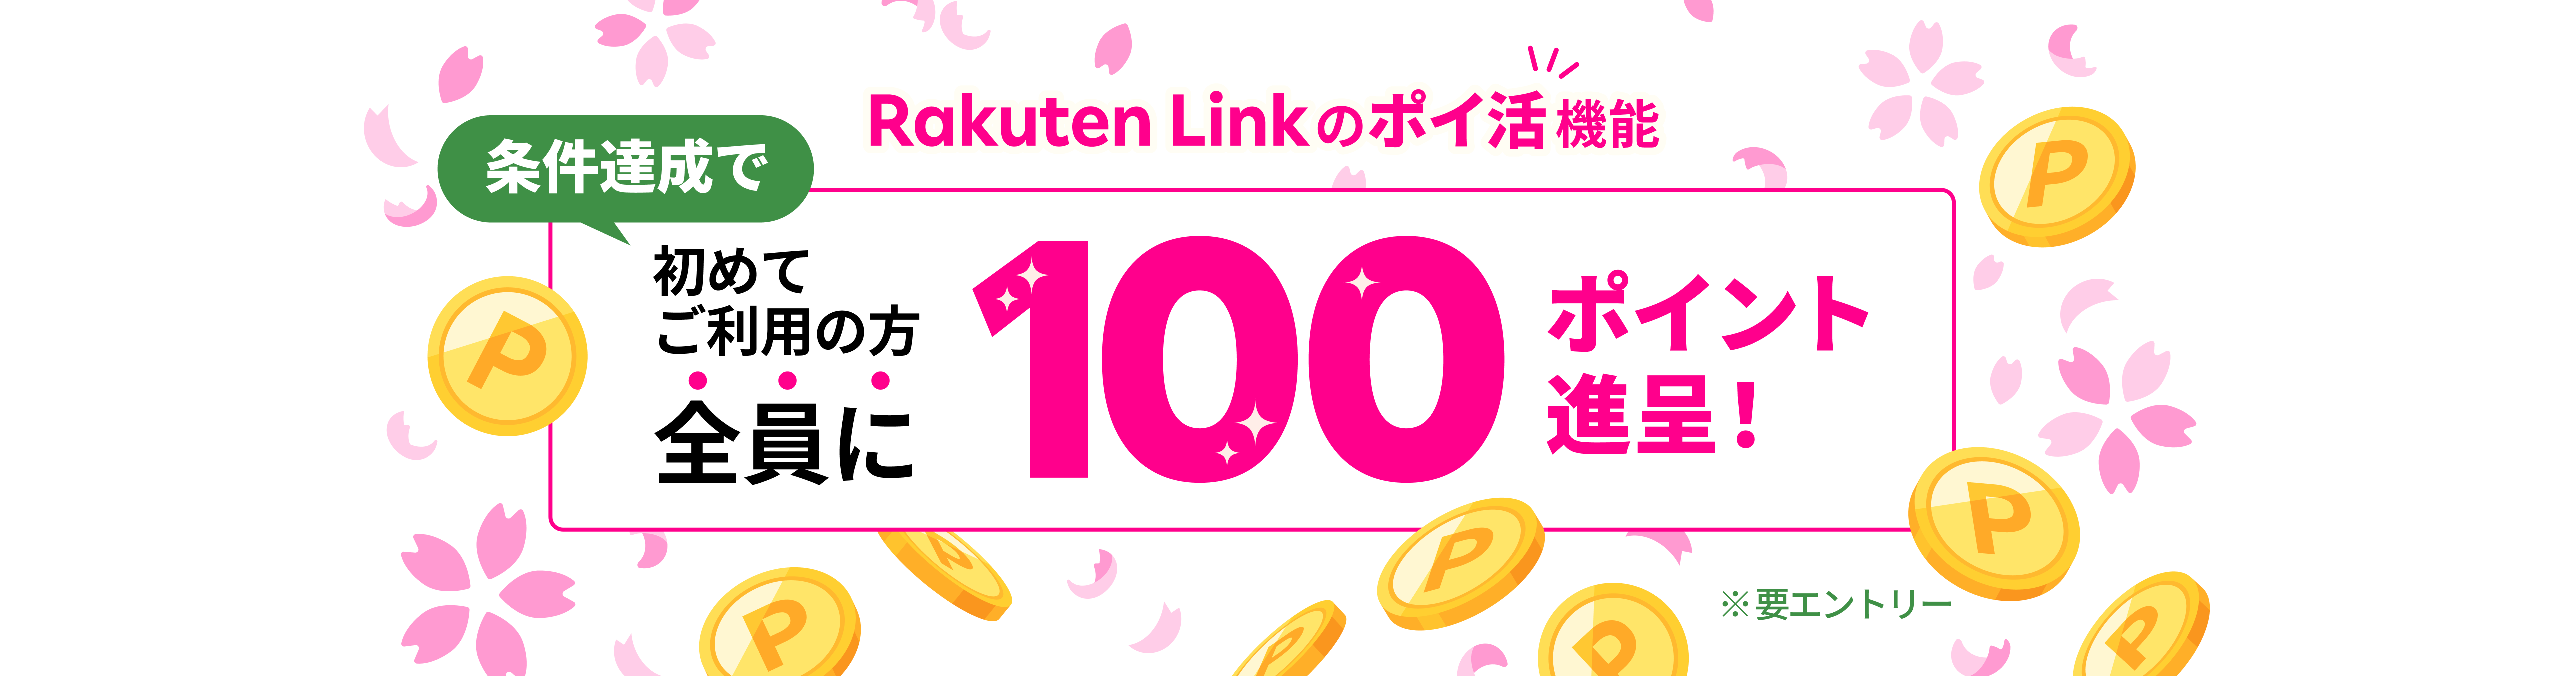 Rakuten Link のポイ活機能 3日間ご利用で 初めてご利用の方全員に100ポイント進呈！ ※要エントリー